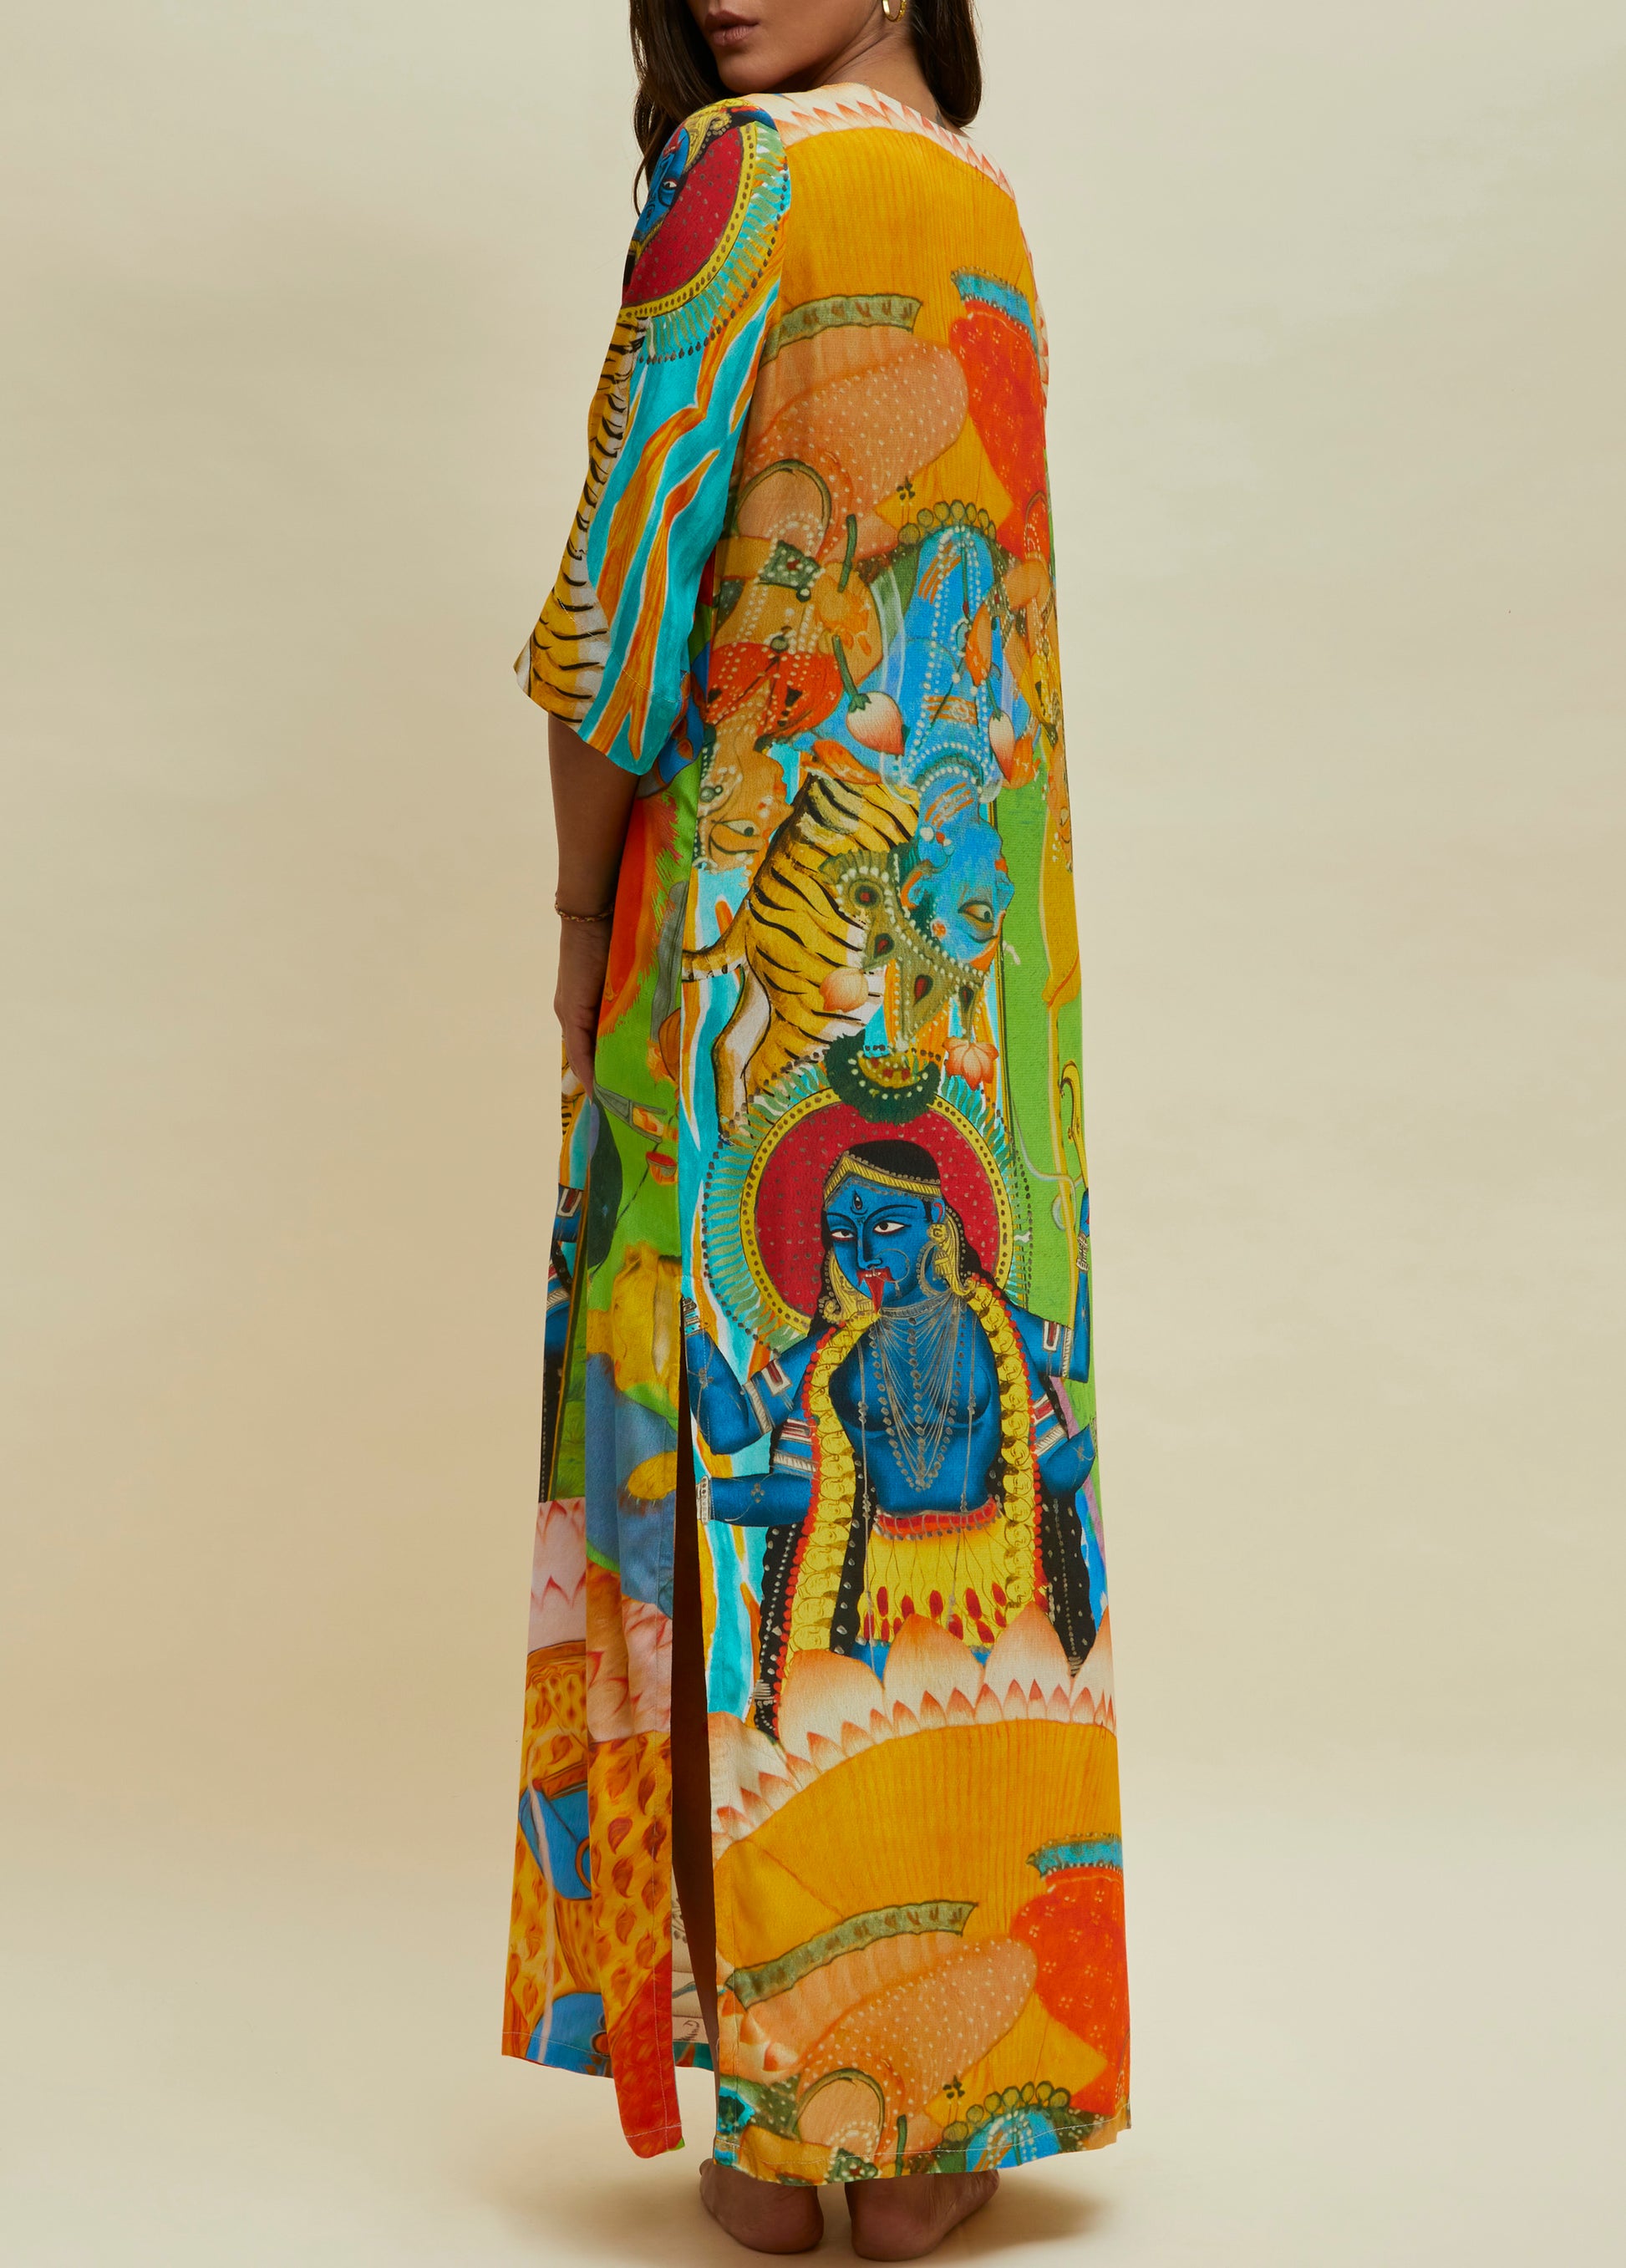 handmade caftan in colorful print by artist and designer ferdinando fusco